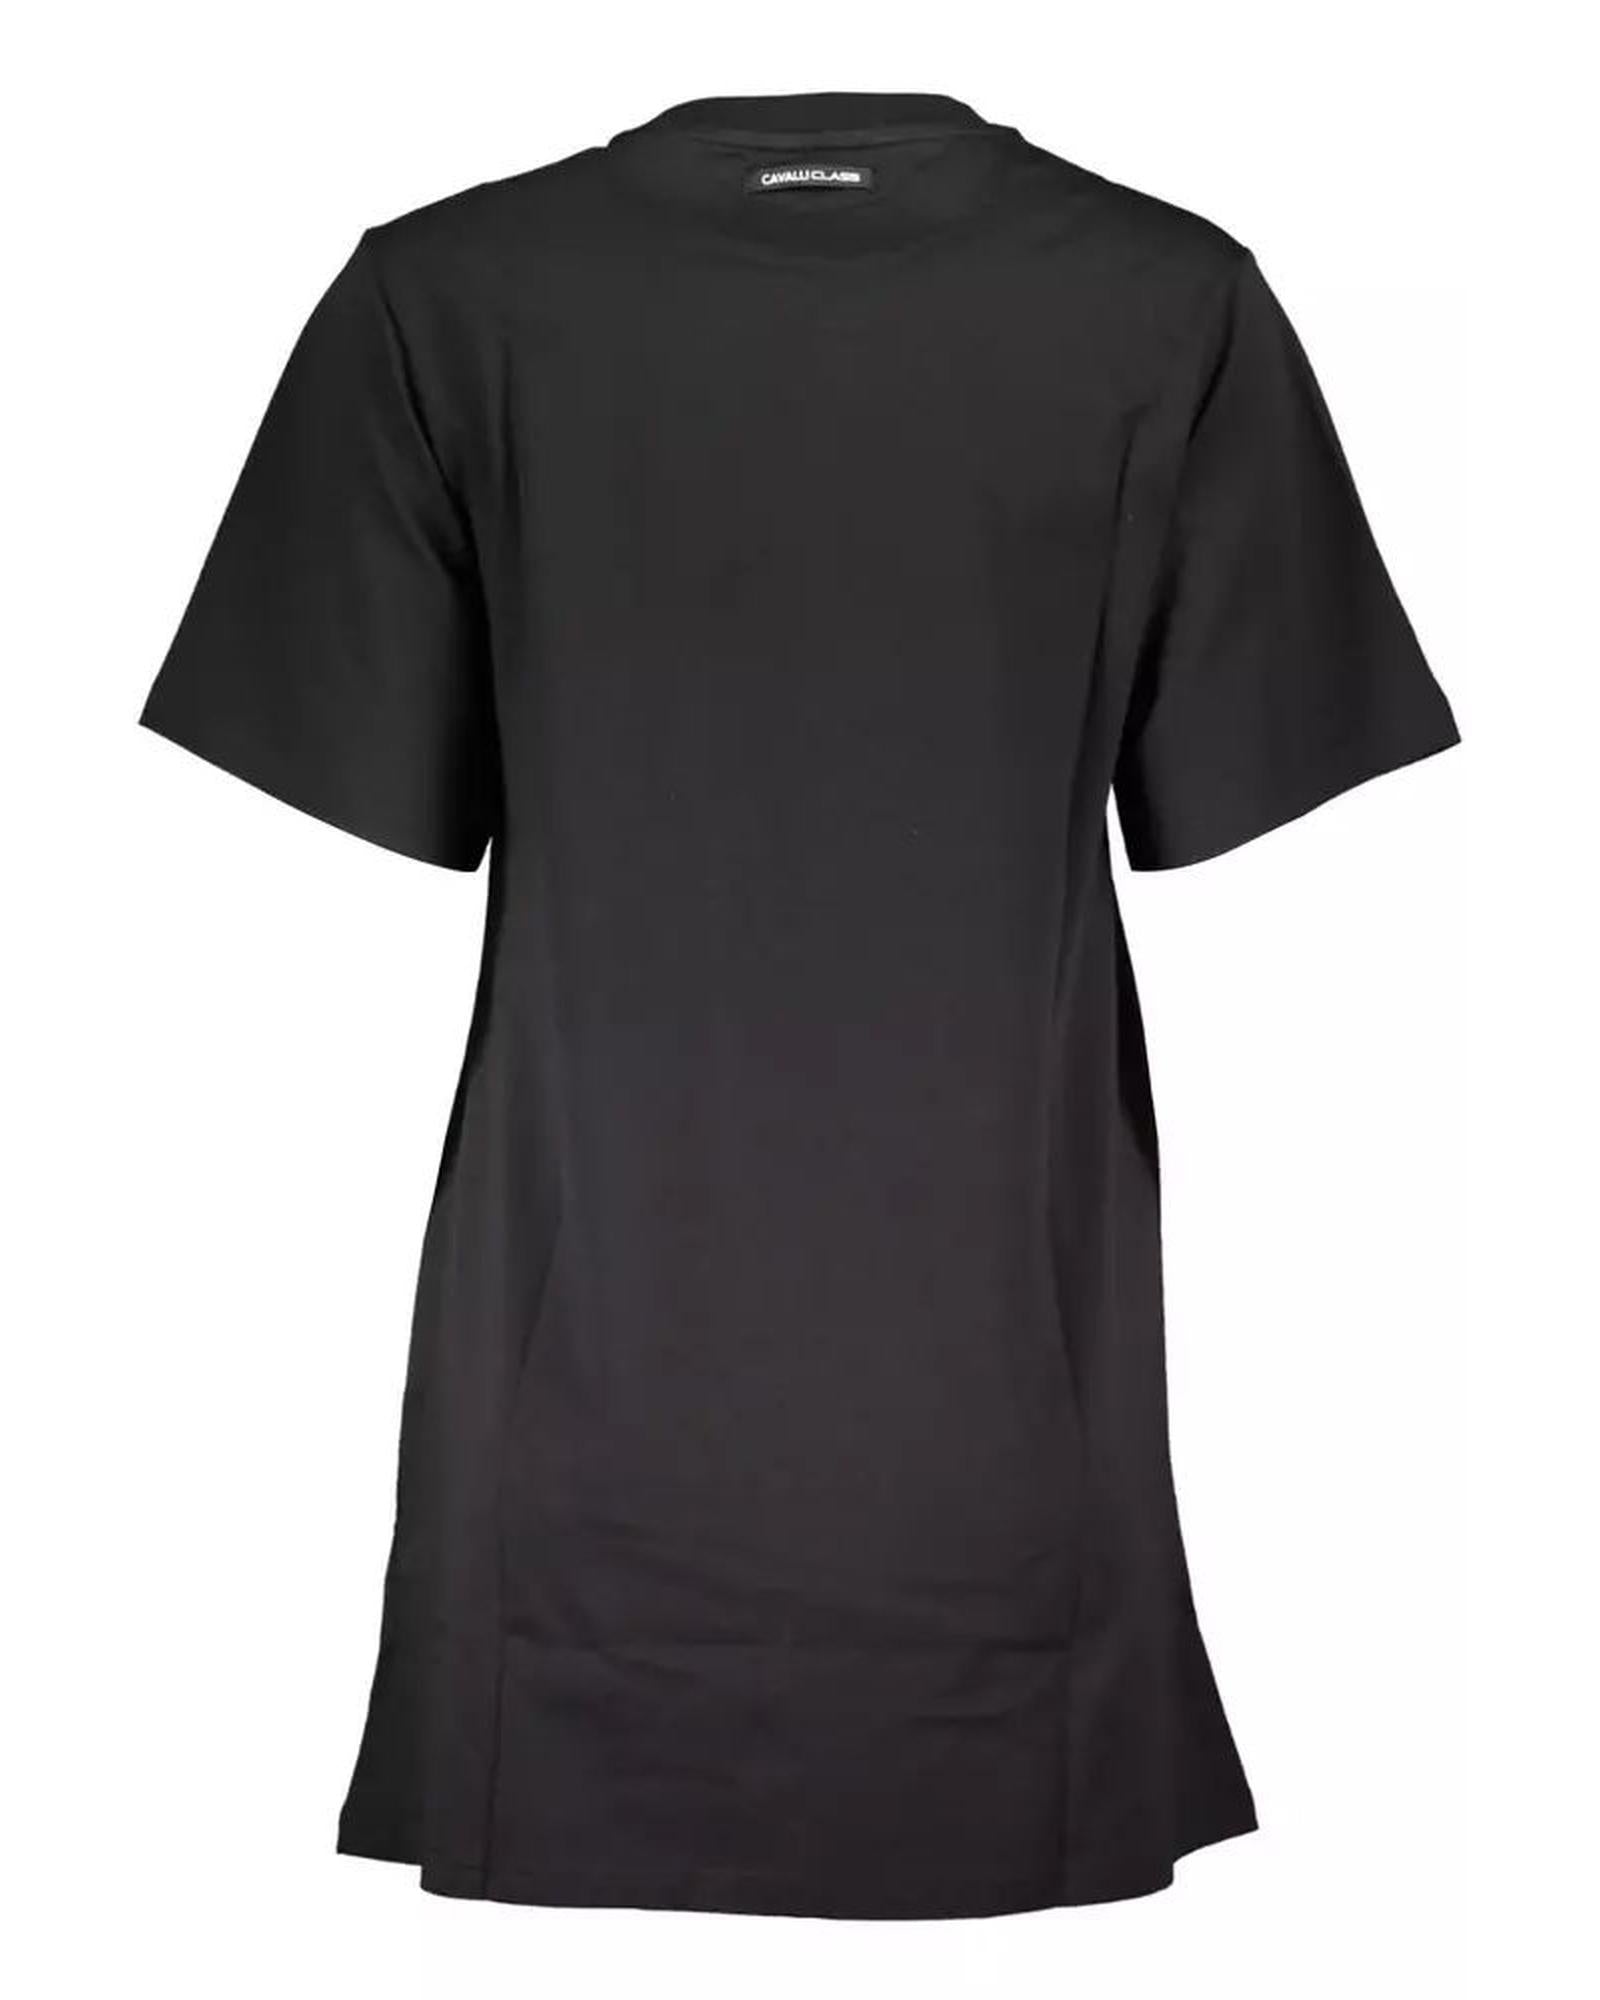 Women's Black Cotton Dress - S